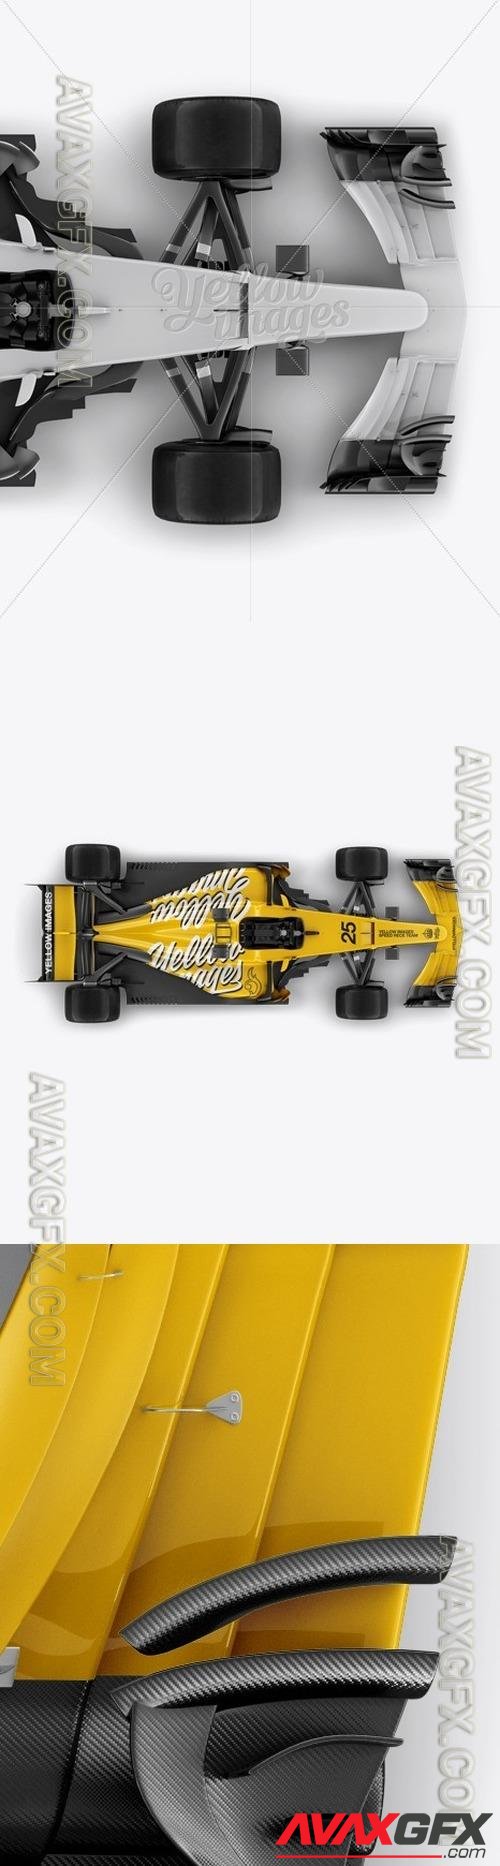 2017 Formula 1 Car Top view Mockup 18024